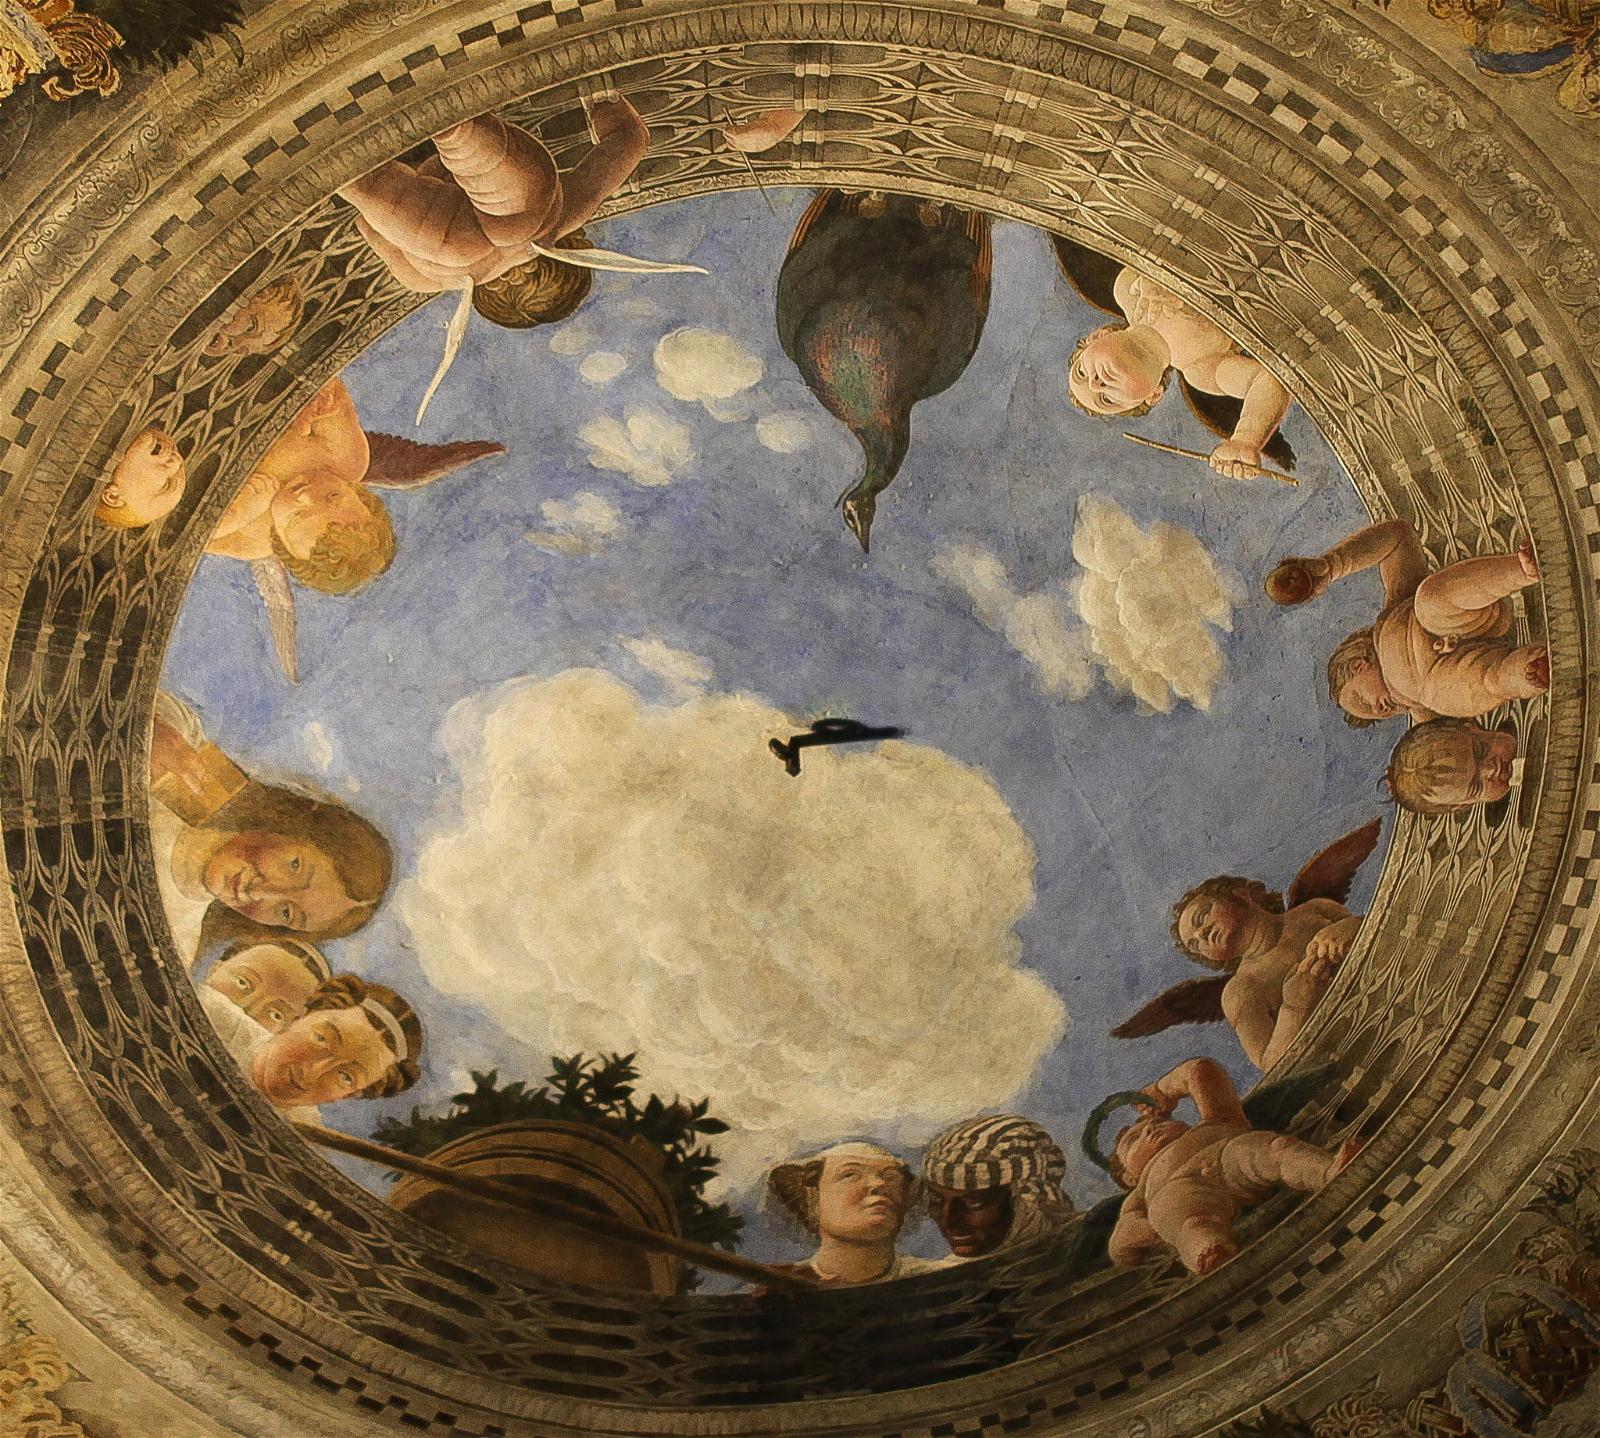 Изображение на Castello di San Giorgio. italy castle painting italia mantova castello mantua mantegna lombardy andreamantegna castellodisangiorgio ceilingpainting